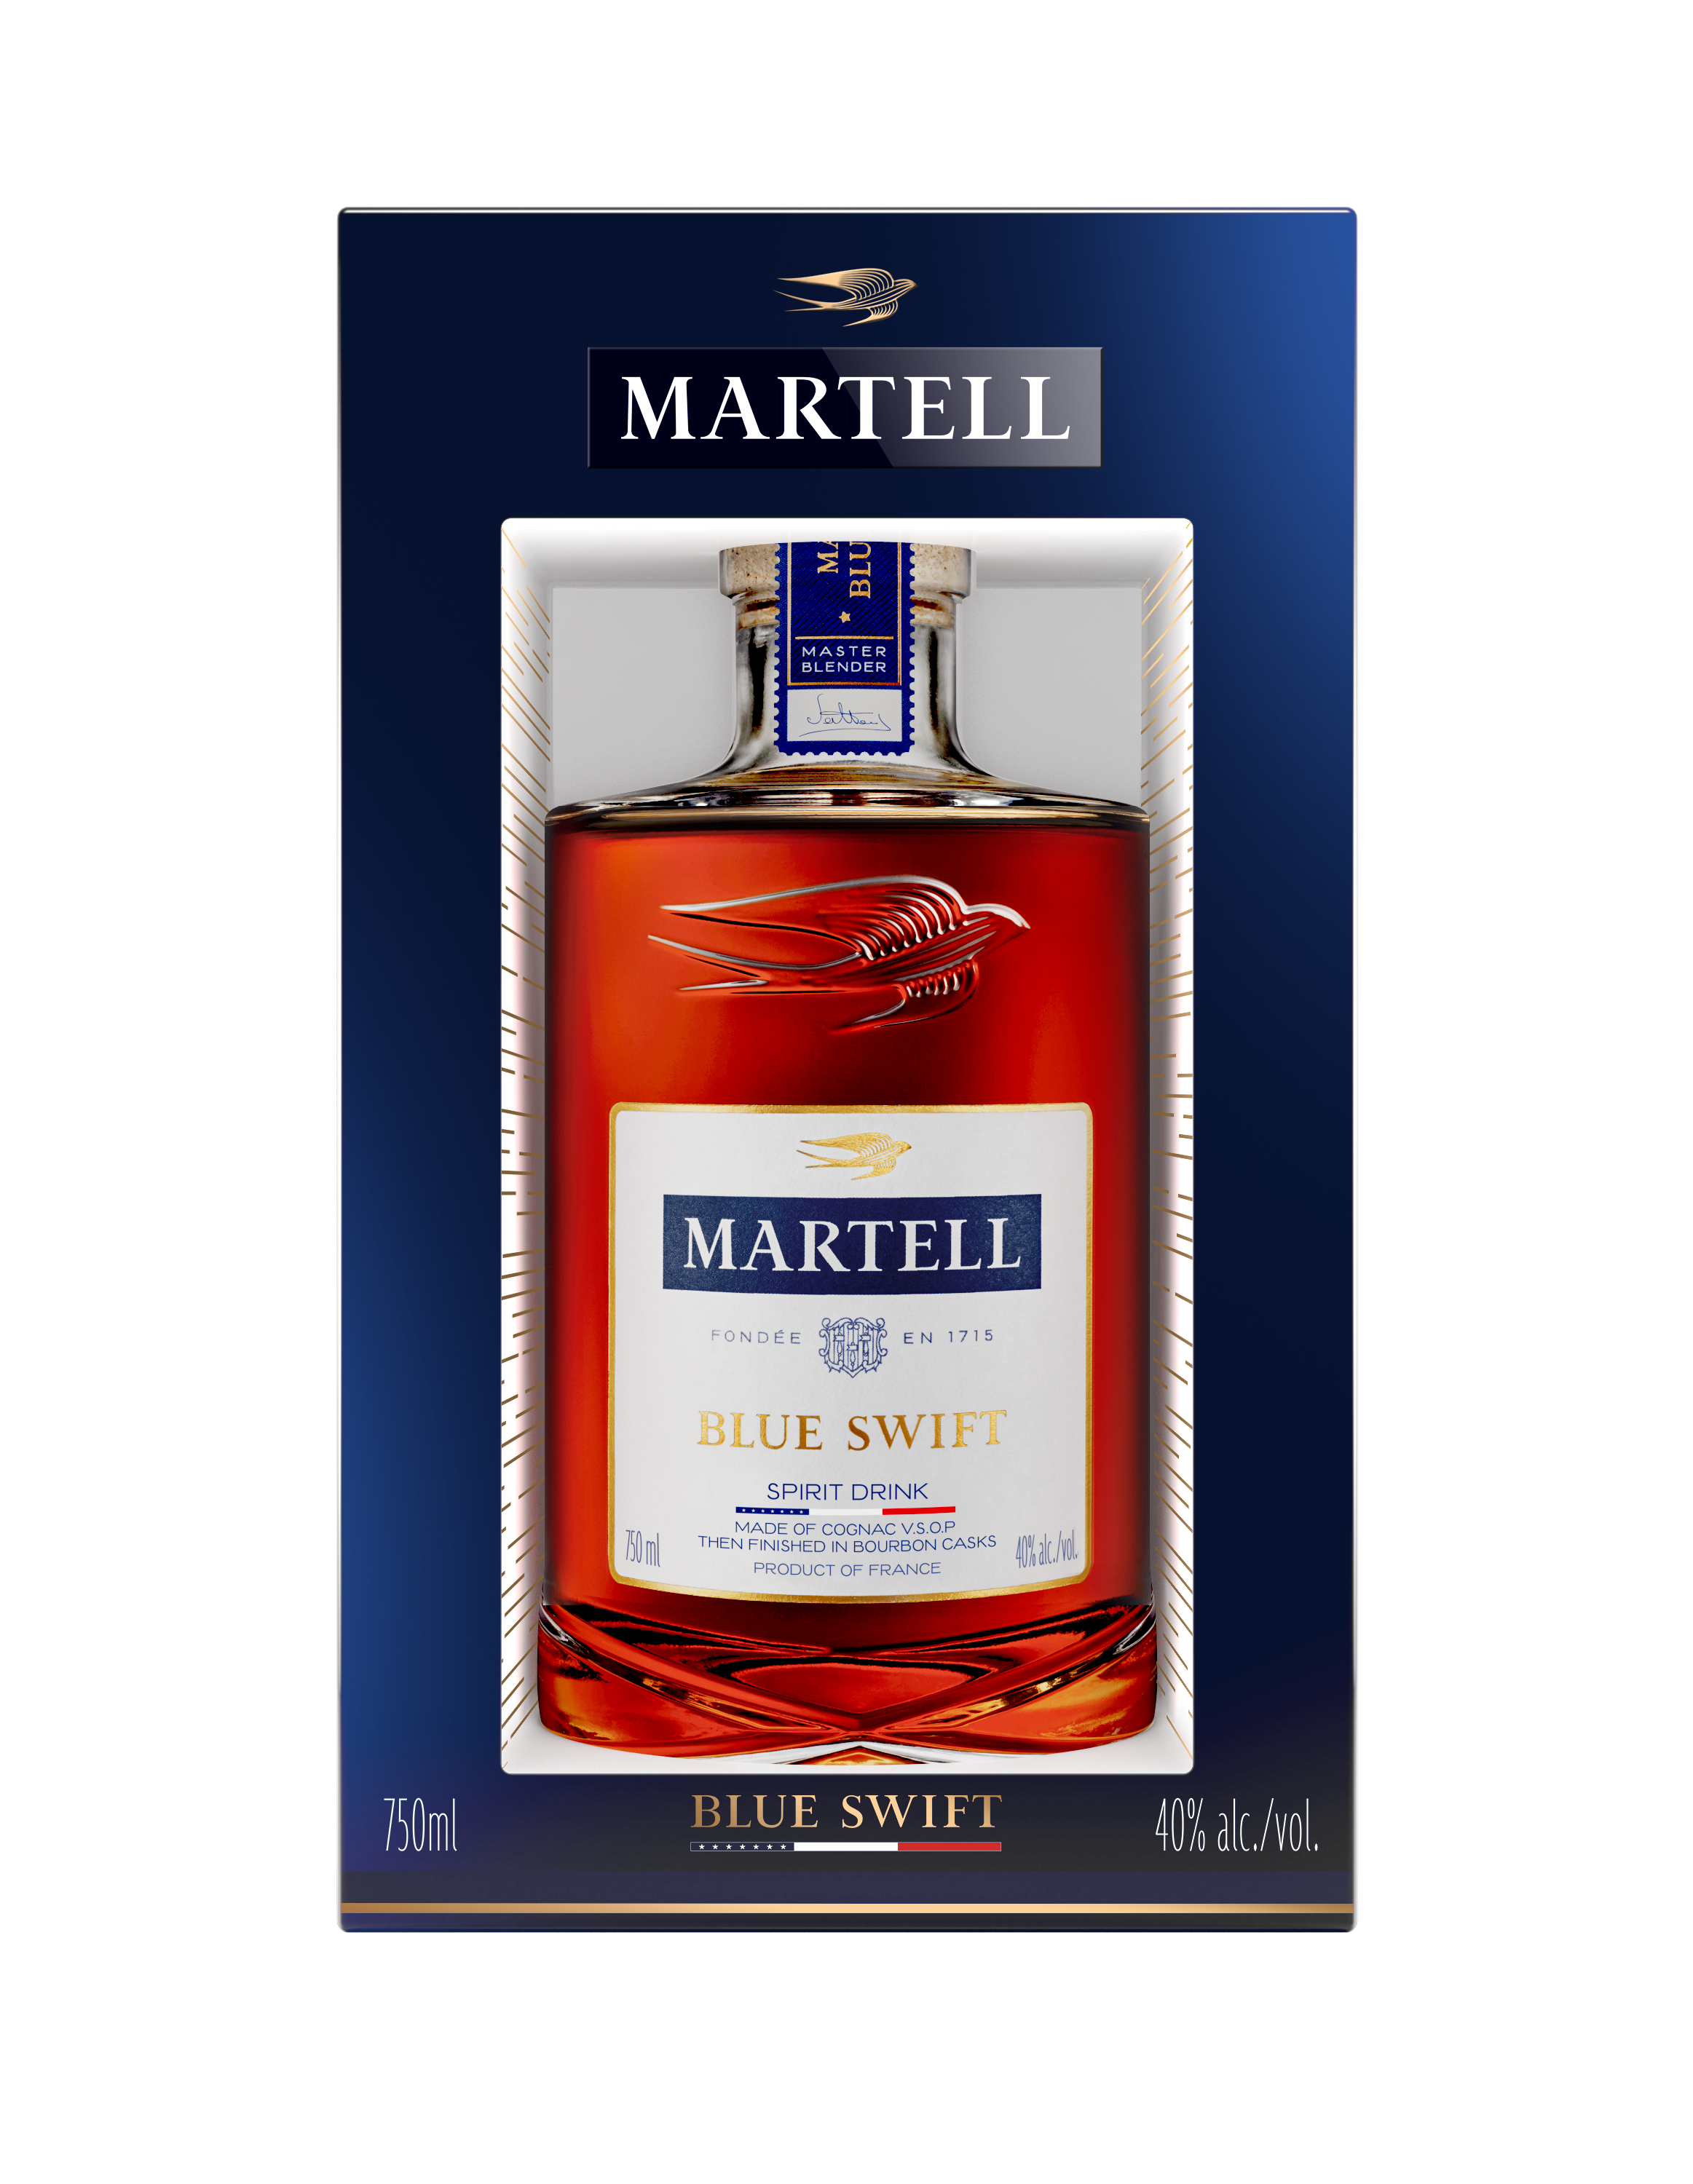 Martell vsop 0.7. Коньяк "Martell" Blue Swift, 0.7 л. Мартель ВСОП 0.7. Коньяк Martell Blue Swift. Мартель ВСОП 0.7 2010 год.